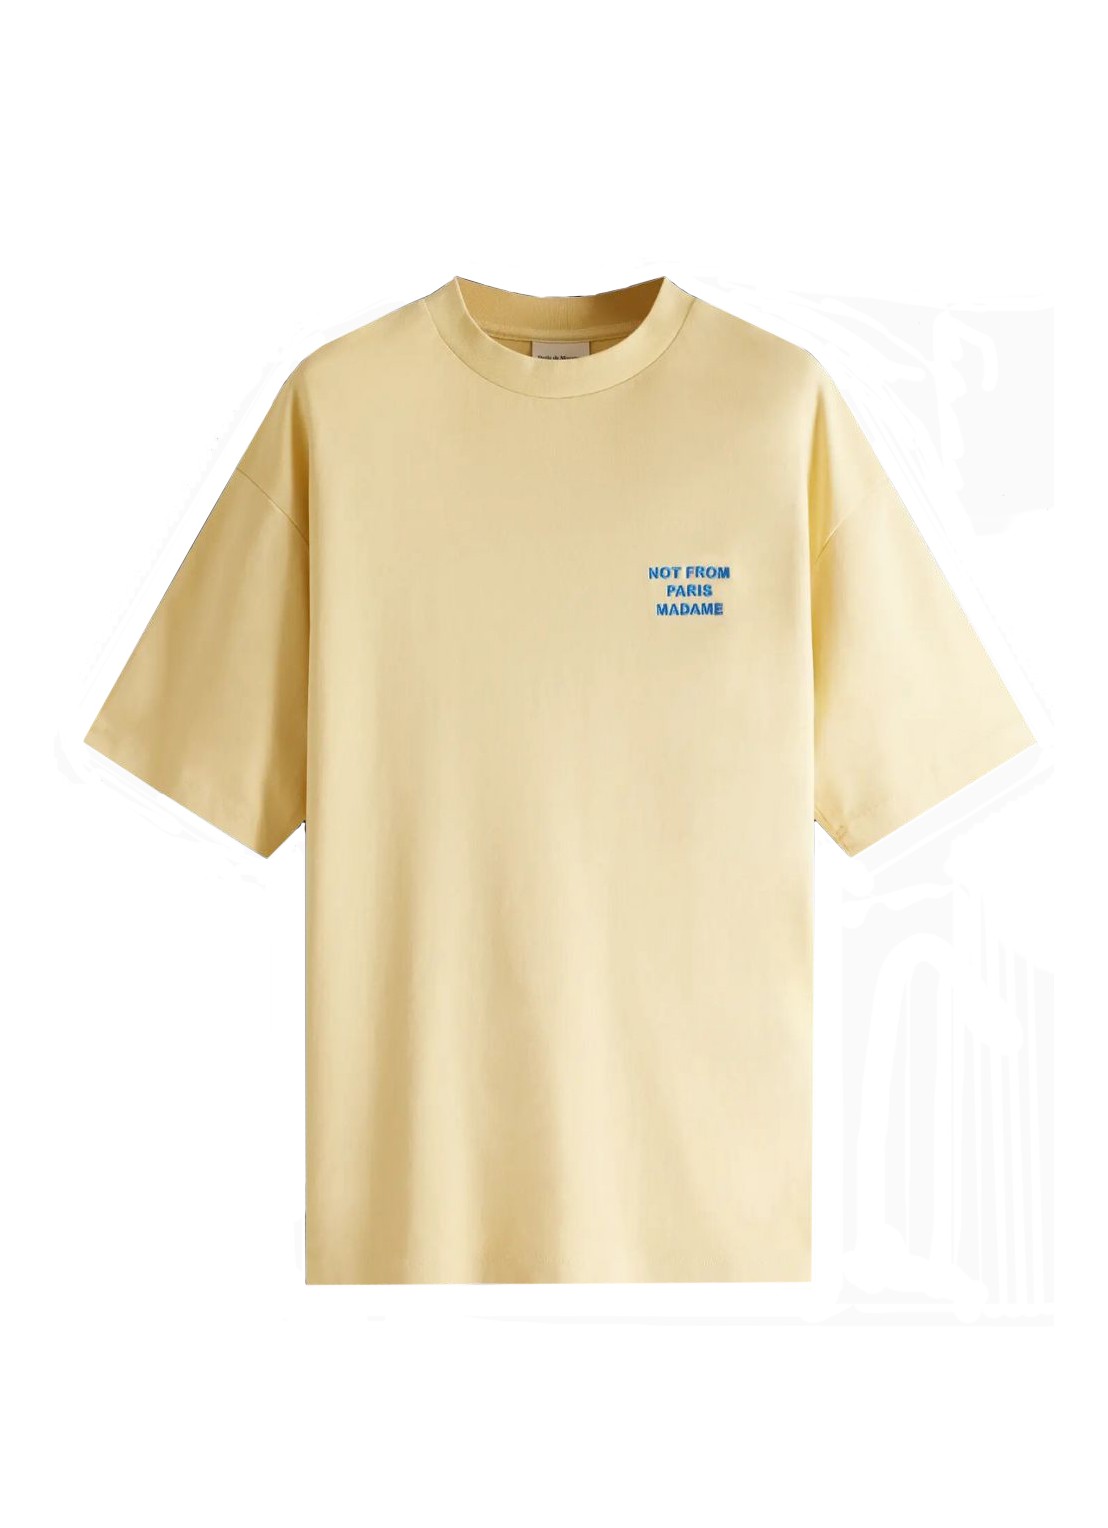 Camiseta drA'le de monsieur t-shirt man le t-shirt slogan dts190co002st straw talla L
 